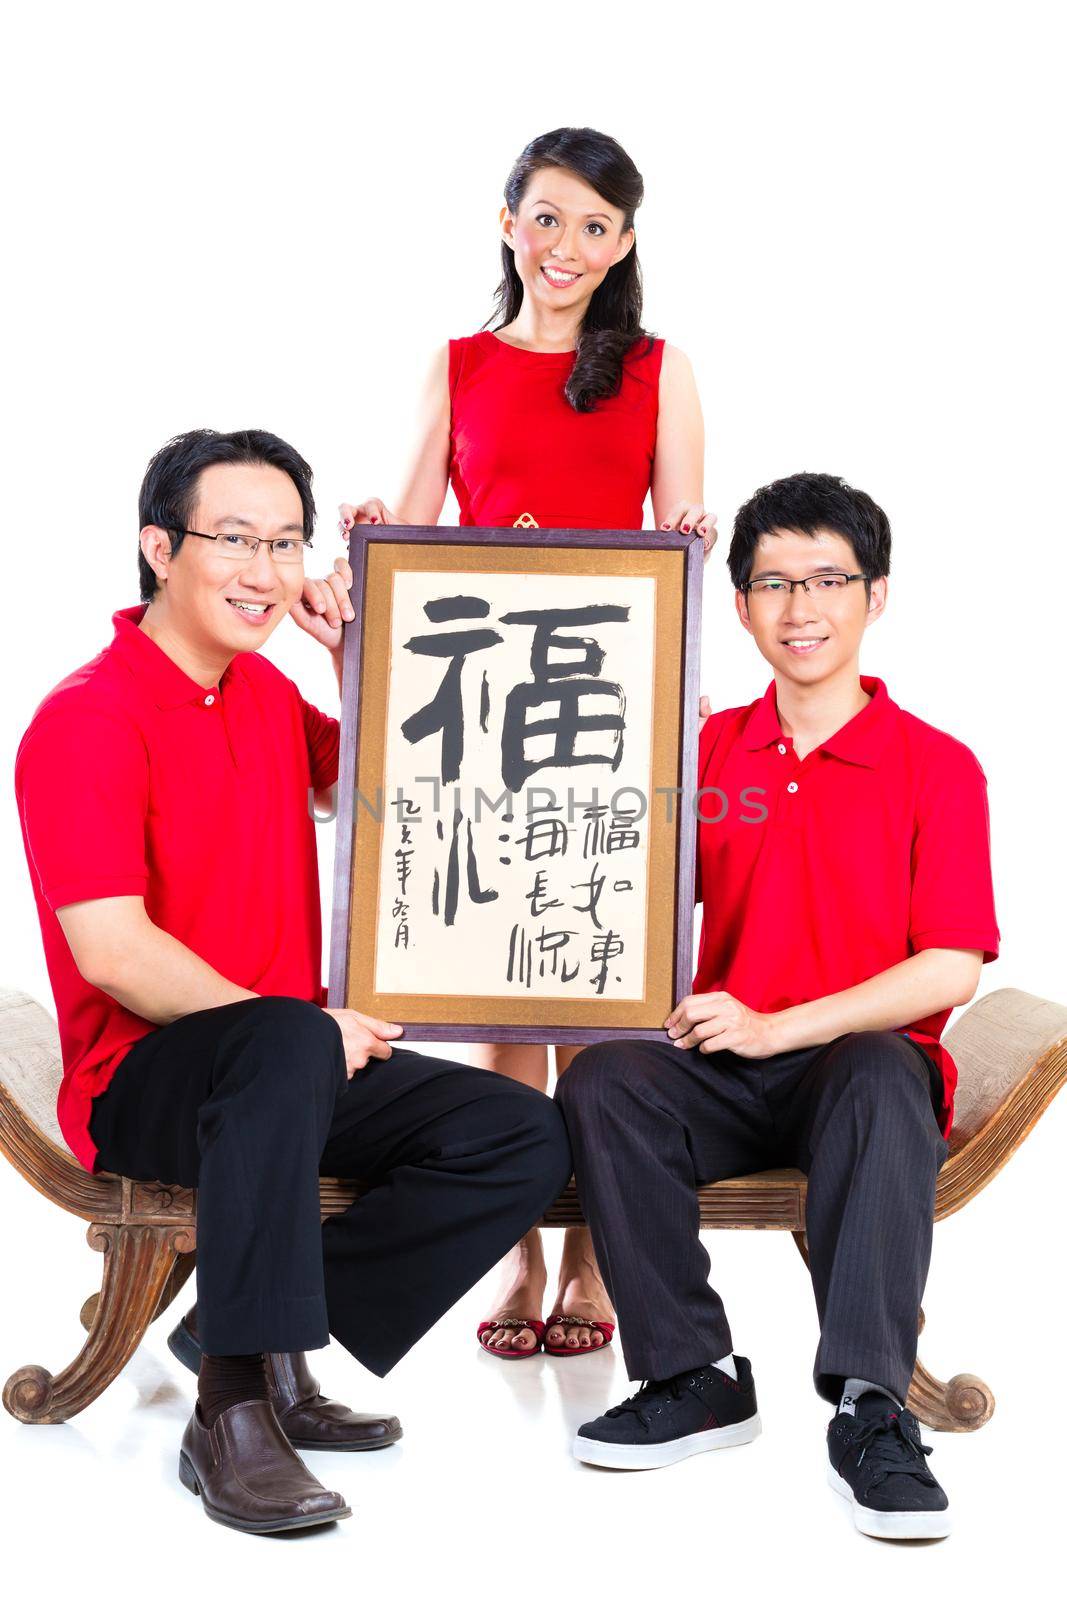 Family celebrates Chinese new year by Kzenon